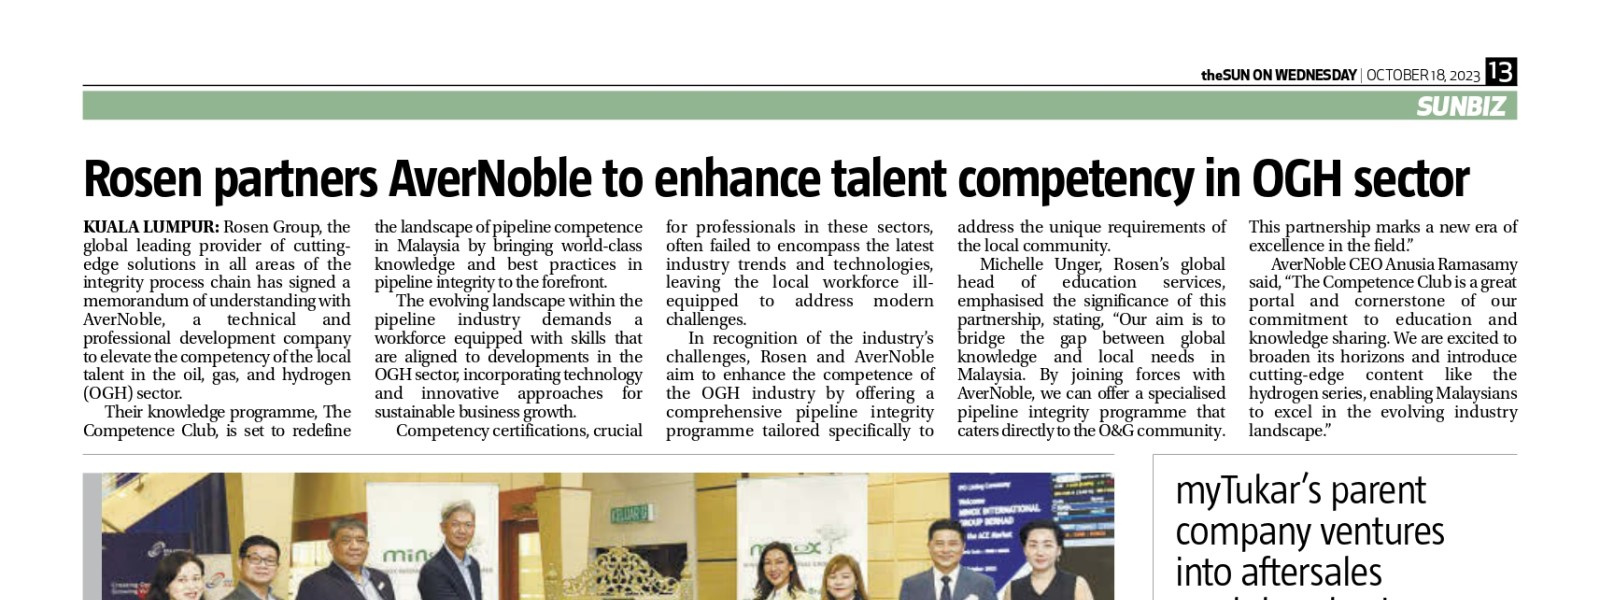 Rosen partners Avernoble to enhance talent competency